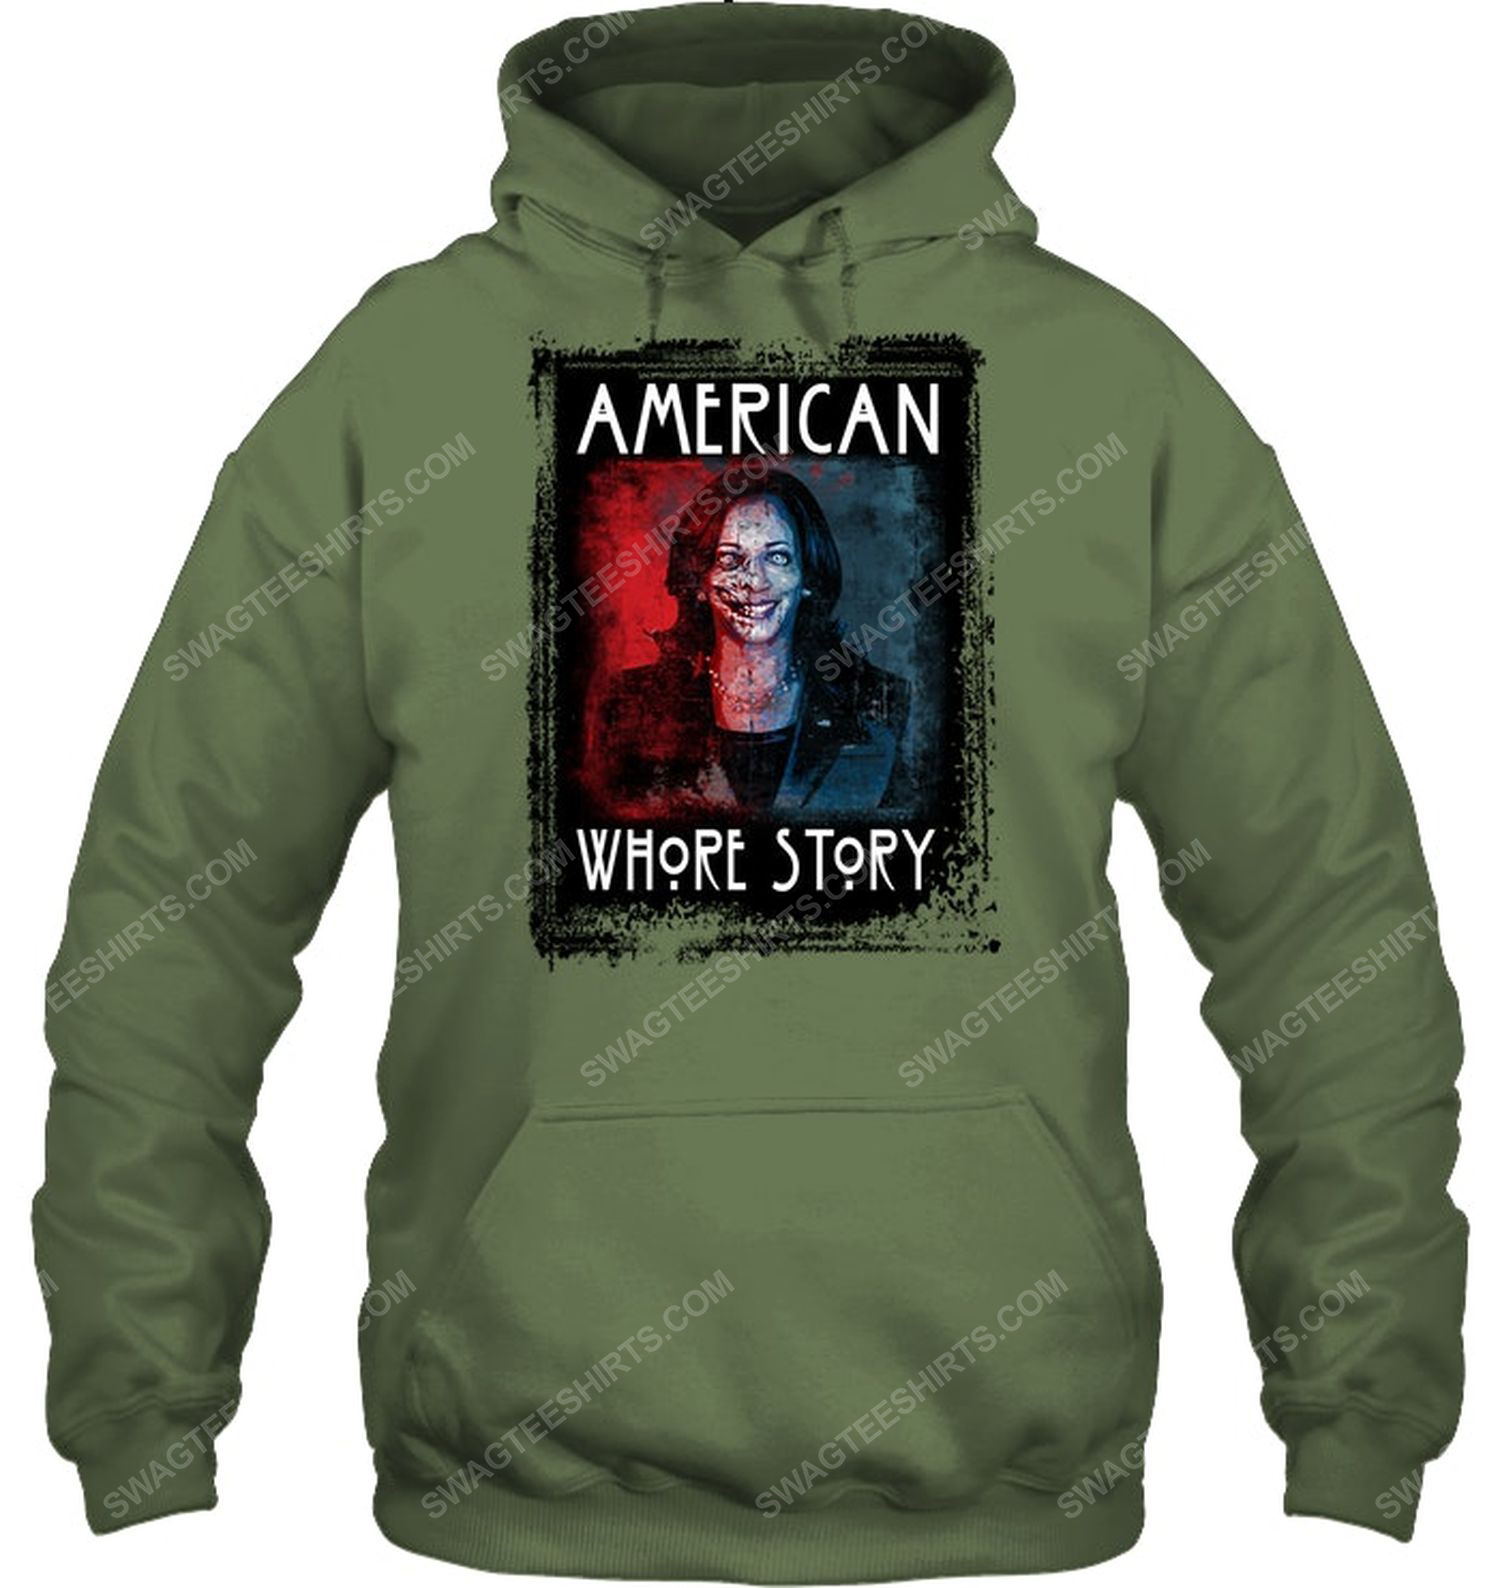 Kamala harris american whore story american horror story political hoodie